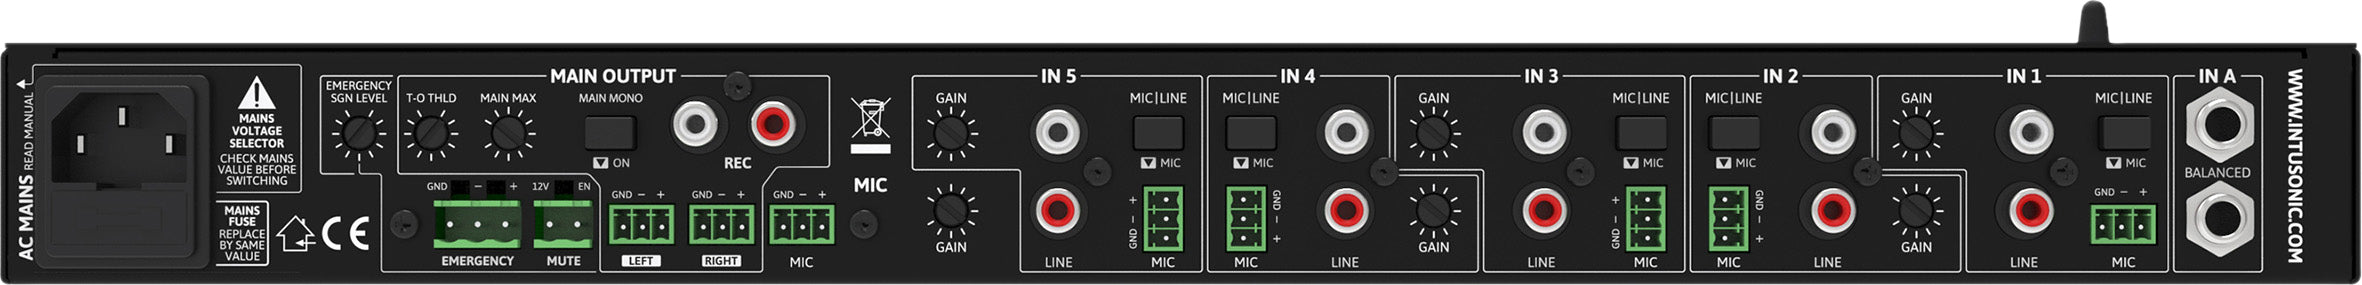 Intusonic IntuWorx PAA71 1U Mic/Line Audio Mixer